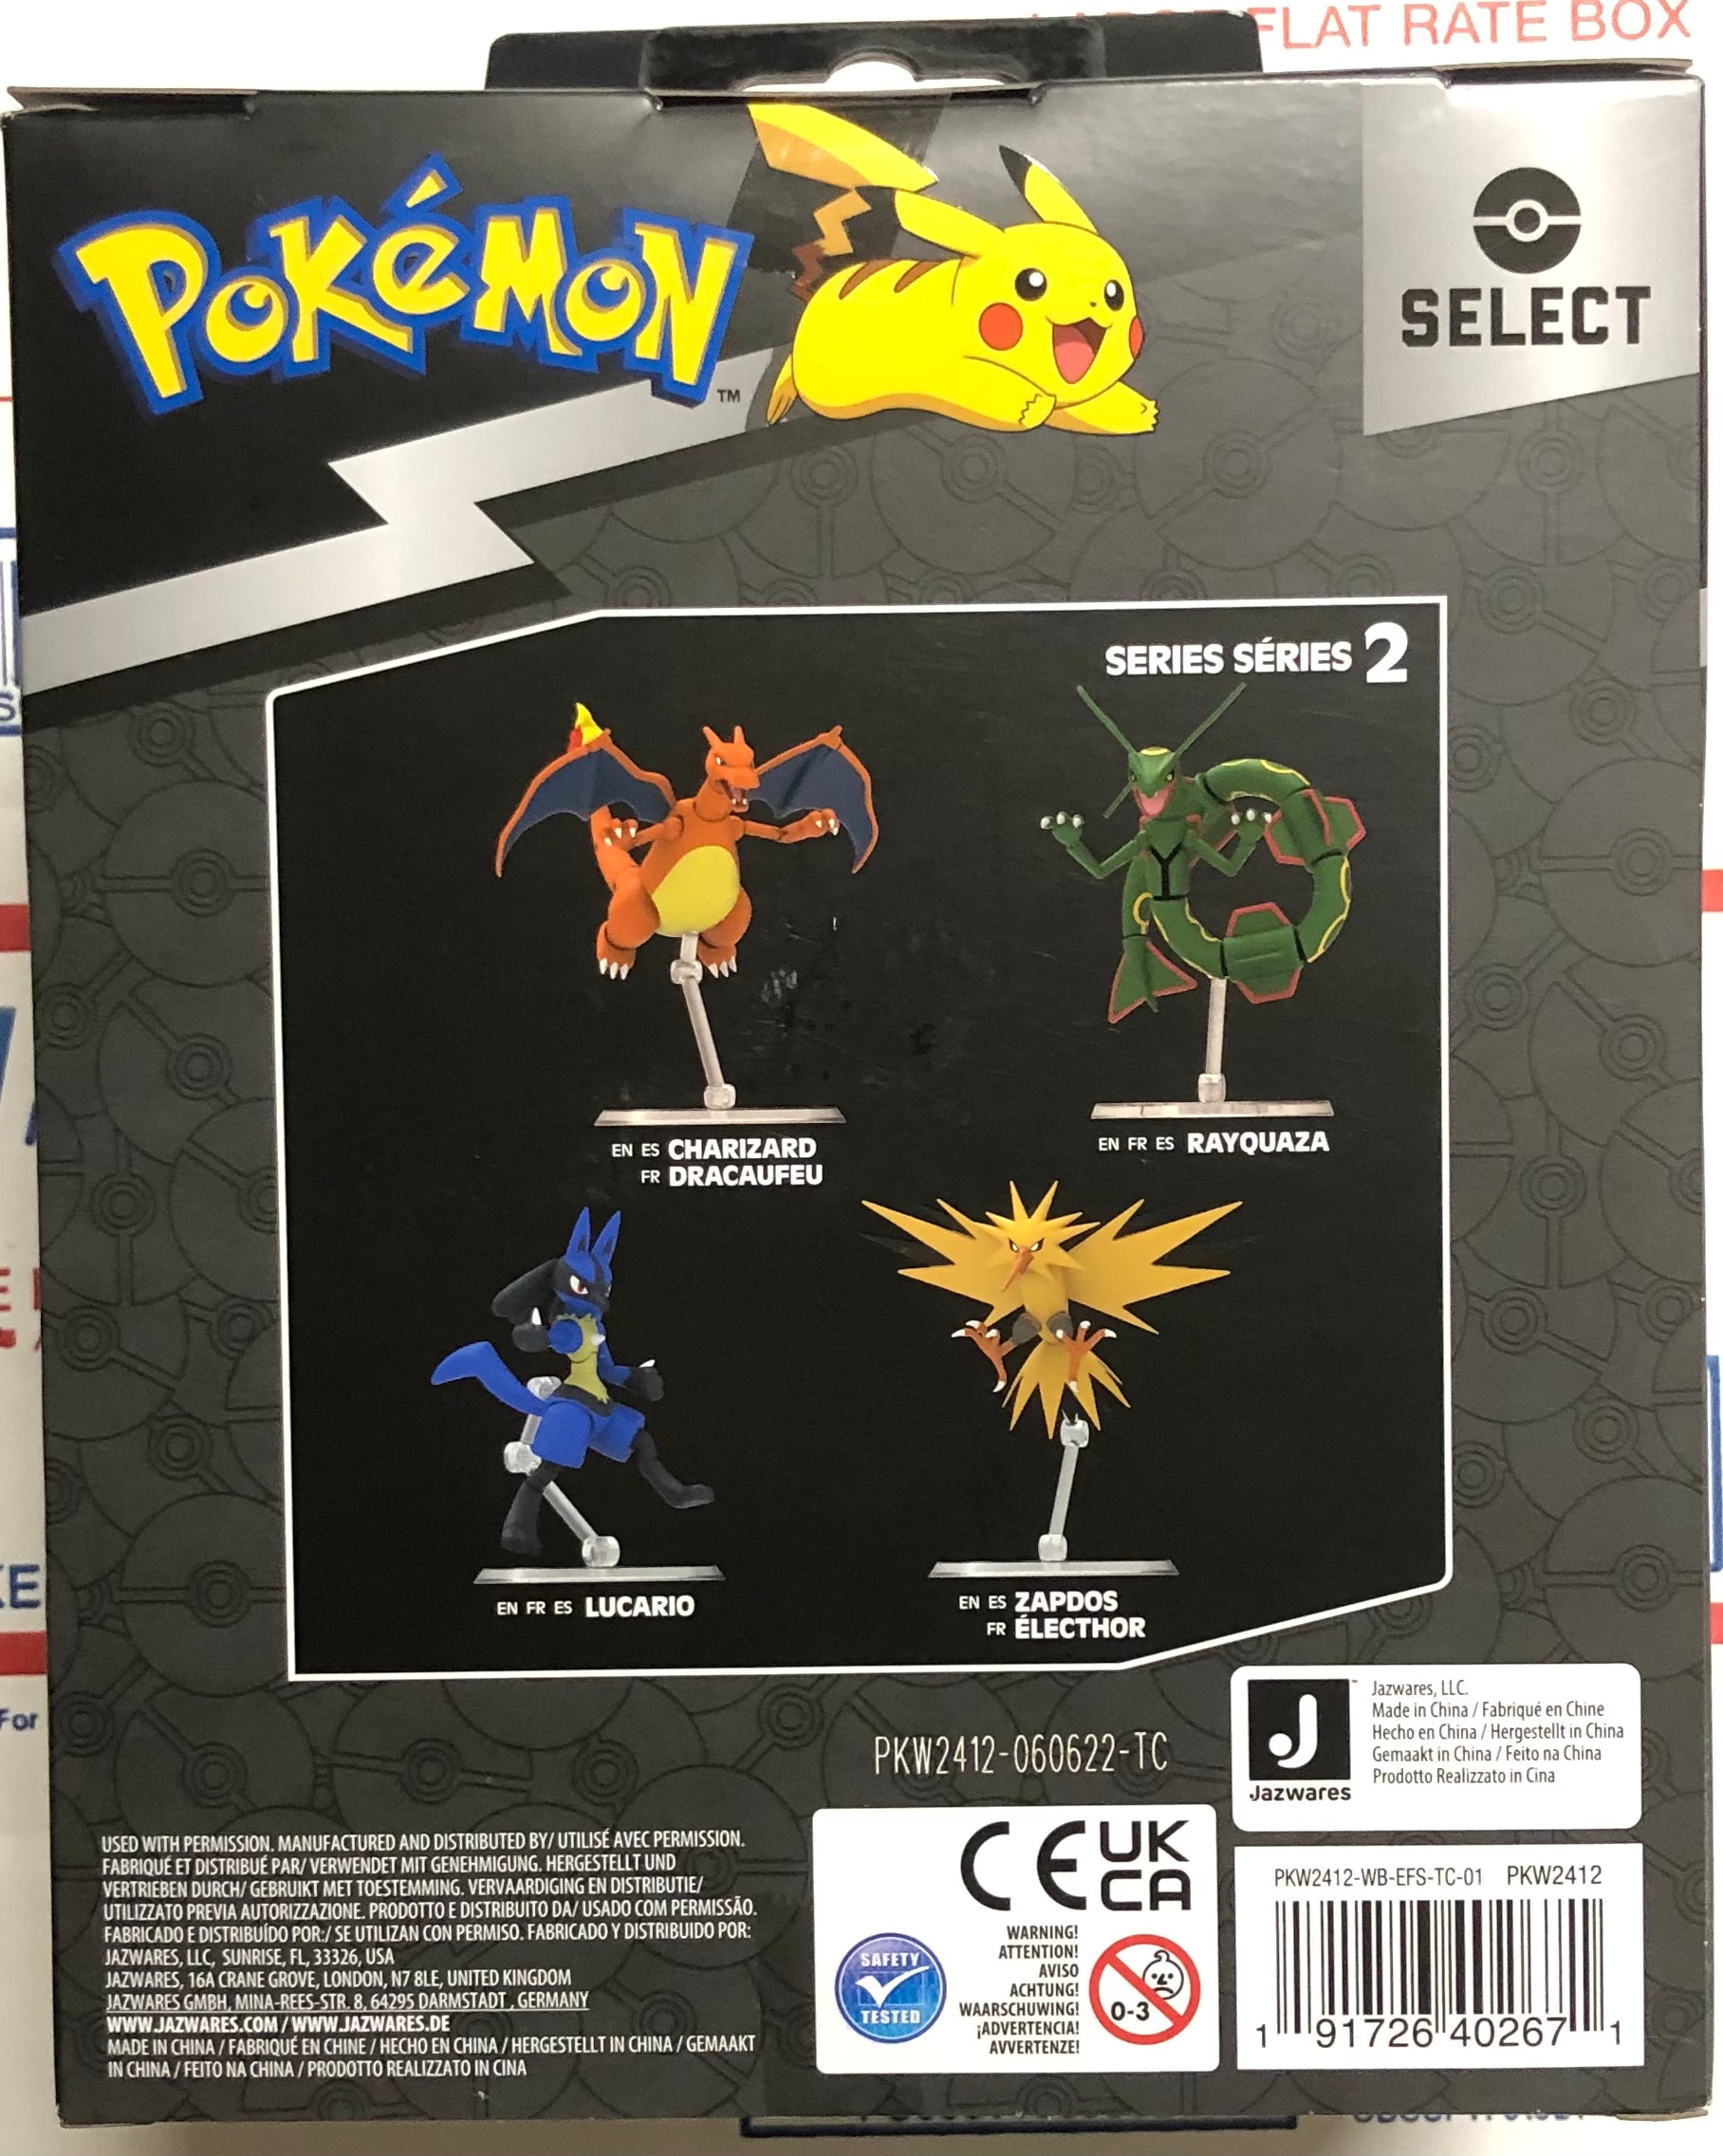  Pokémon Select Super-Articulated 6-inch Zapdos